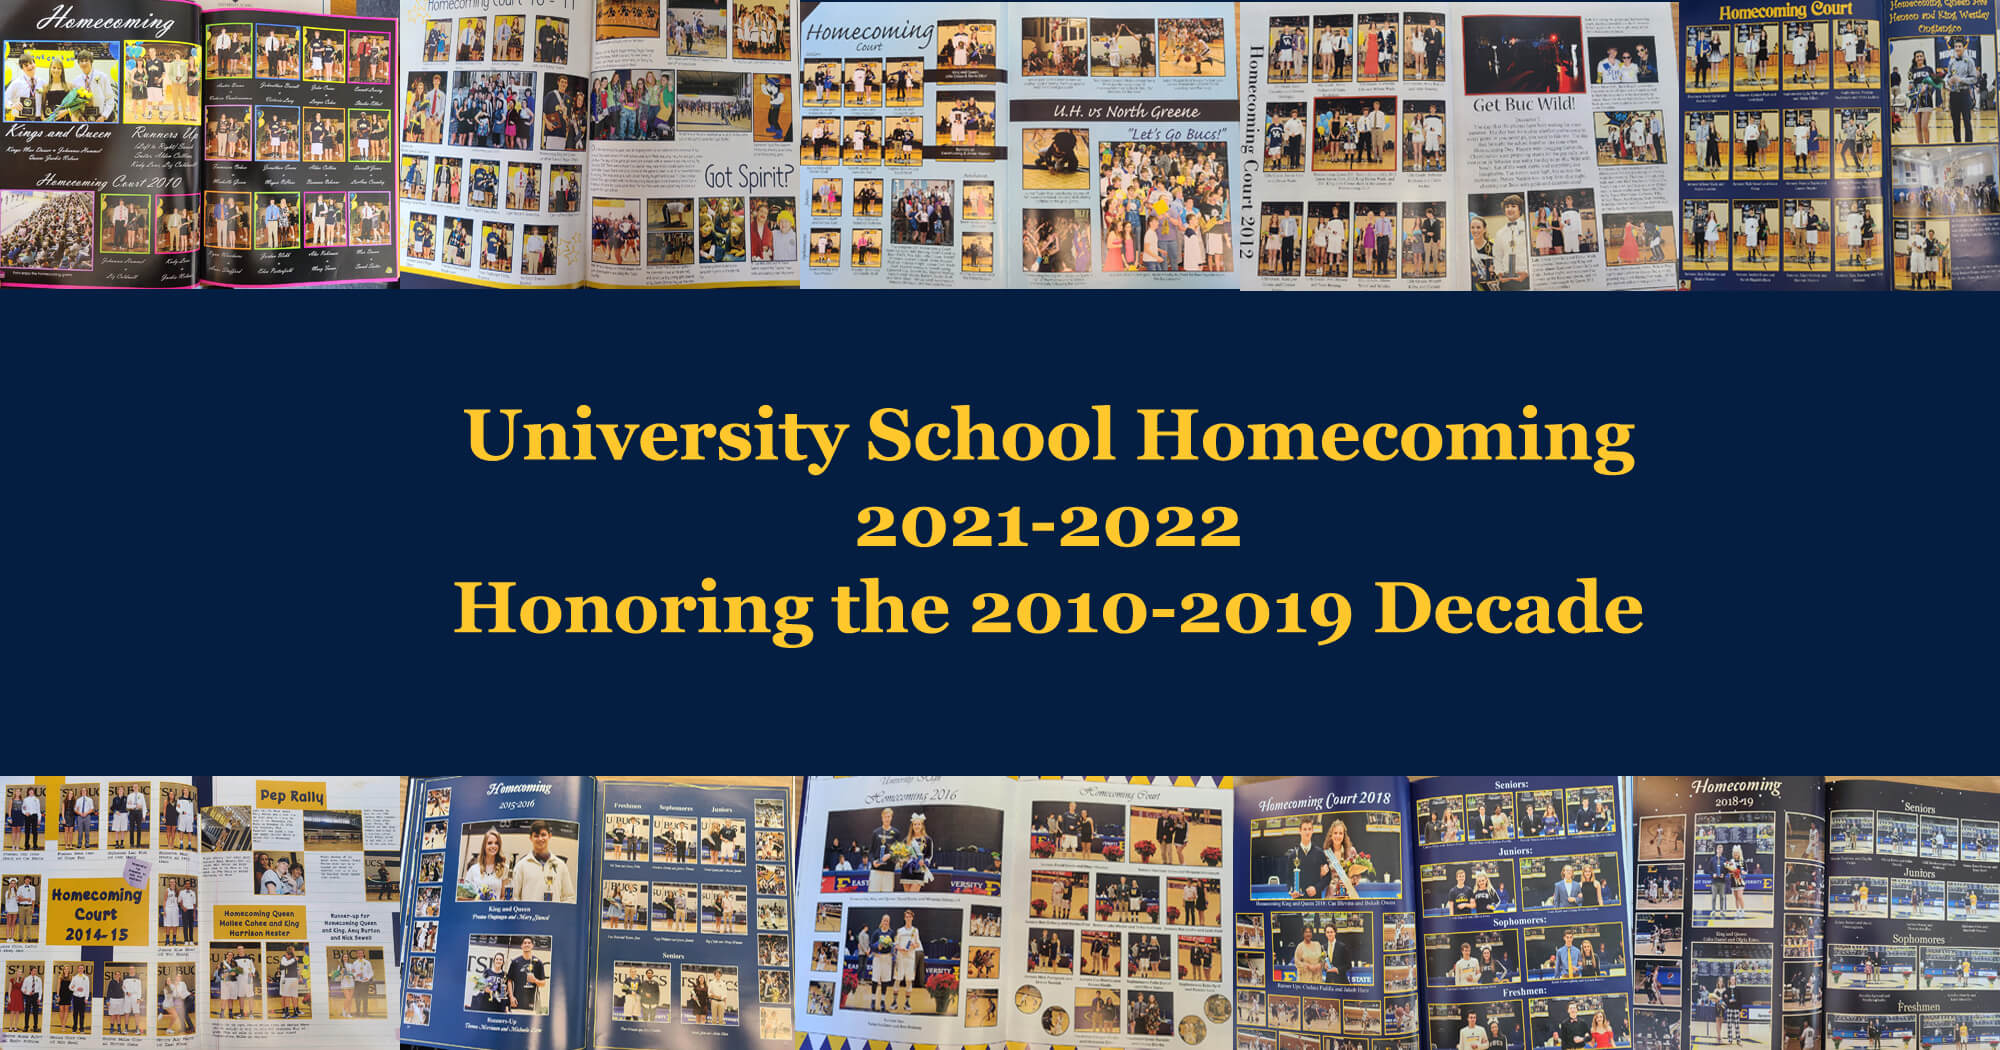 University School Homecoming - 2010-2019 Decade